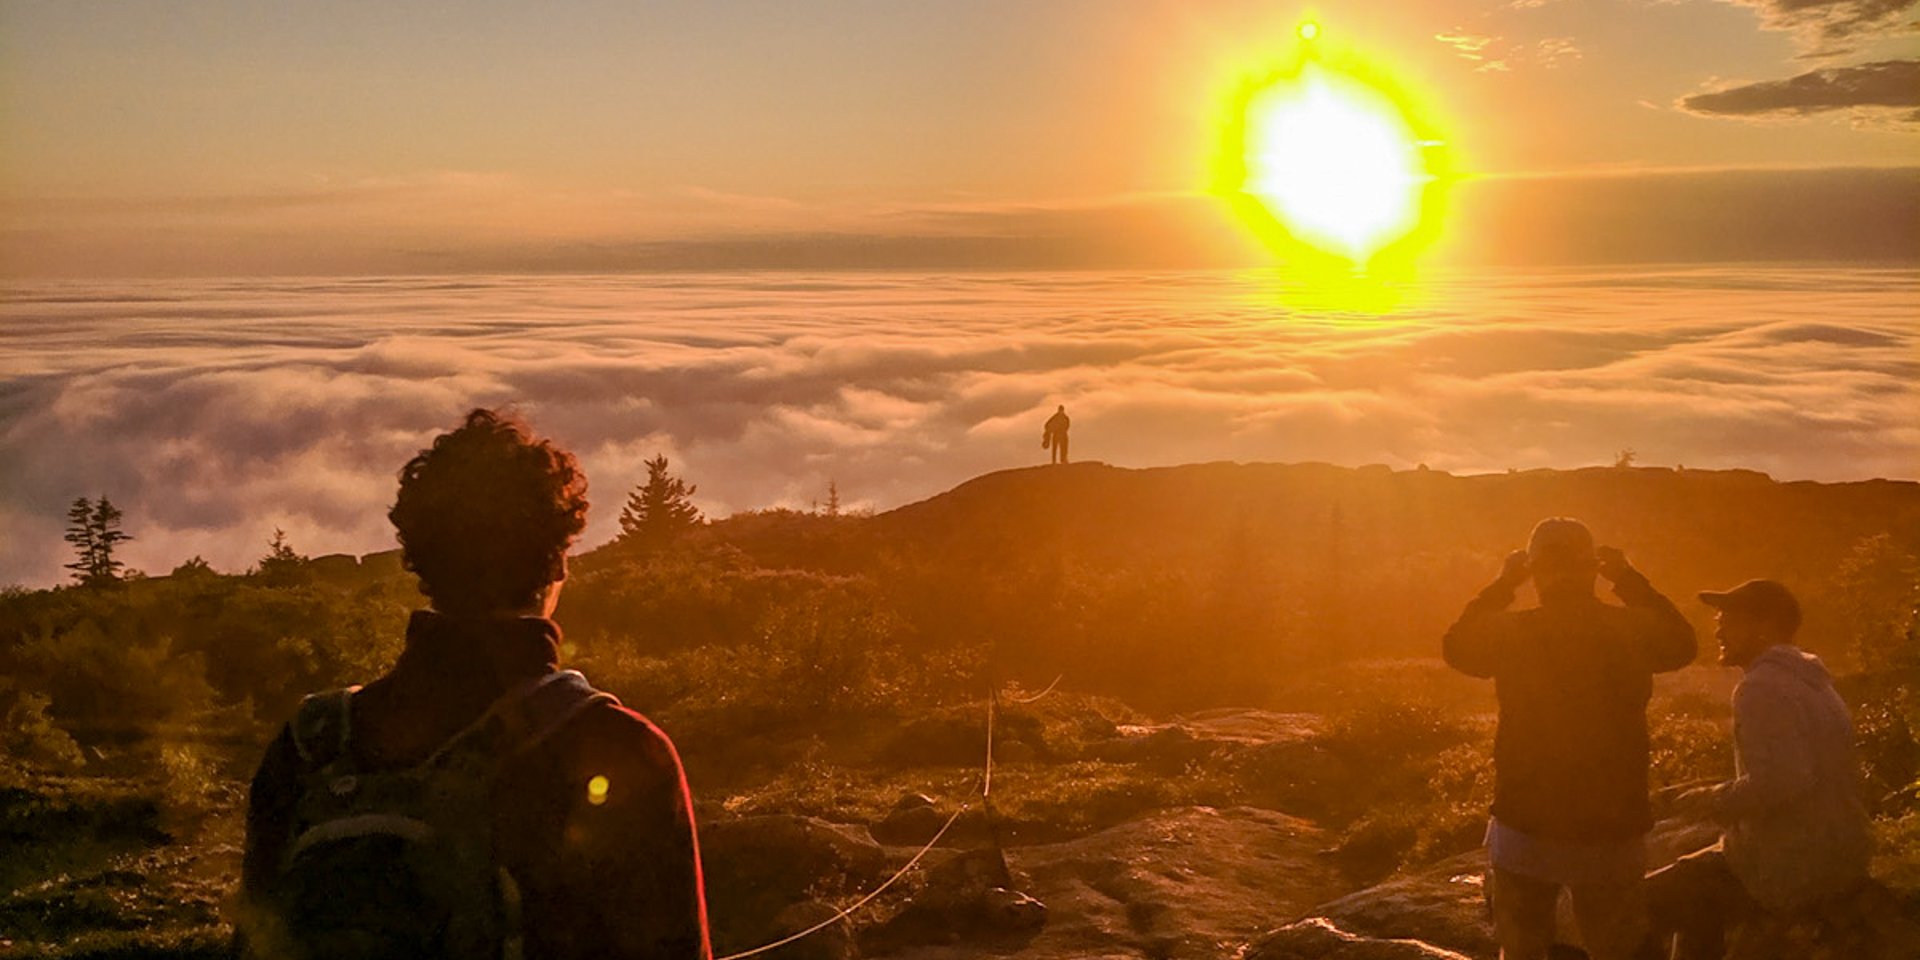 Wildwood teen trekker on a mountain summit, looking out across a sea of clouds below a golden sunset